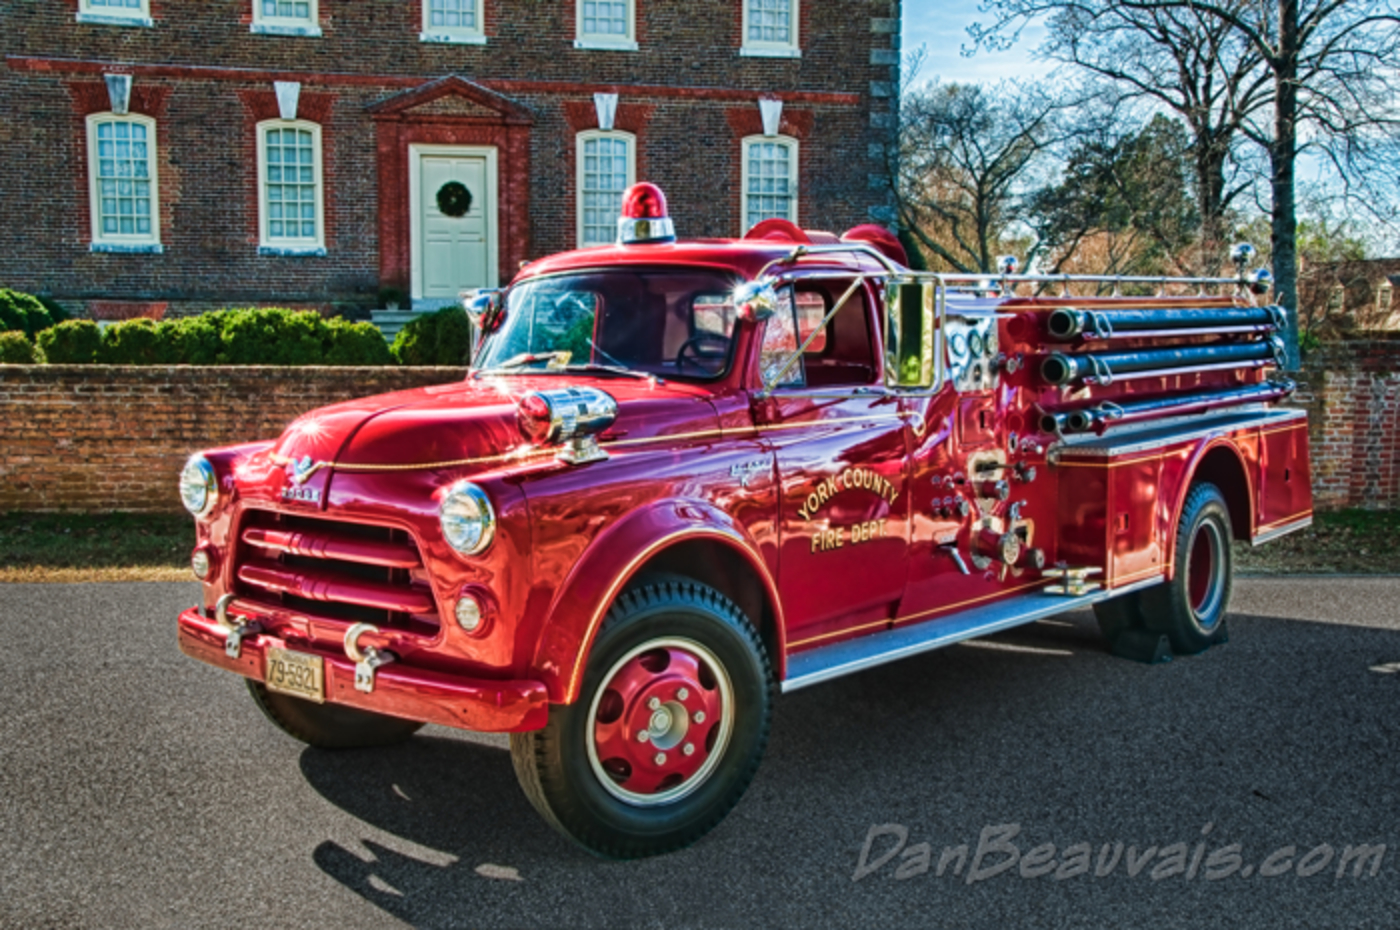 Restored 1955 Dodge fire truck. A classic 1955 Dodge, with a Howe fire truck